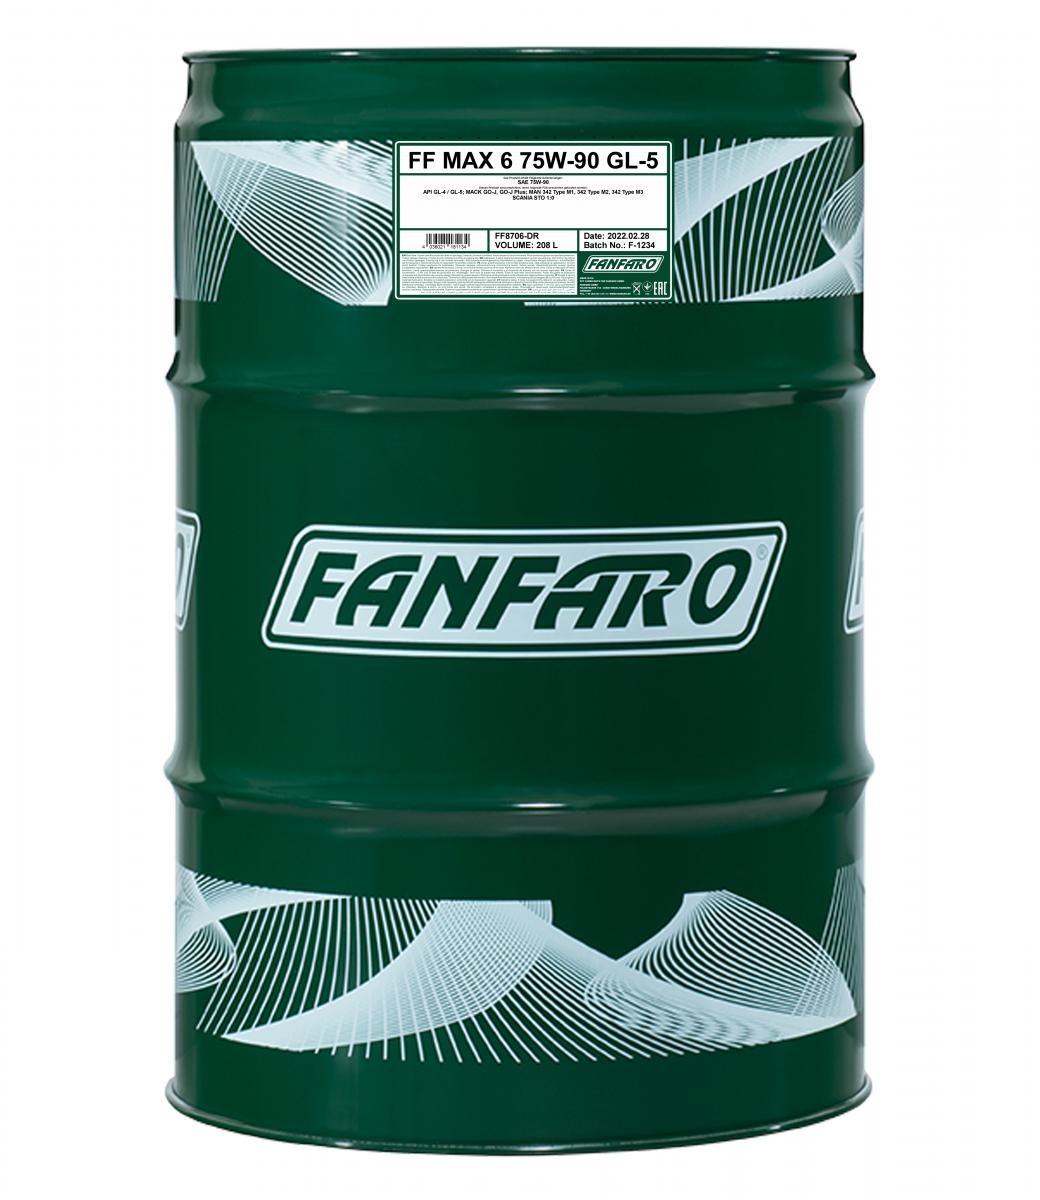 FF8706-DR FANFARO Schaltgetriebeöl für FAP online bestellen